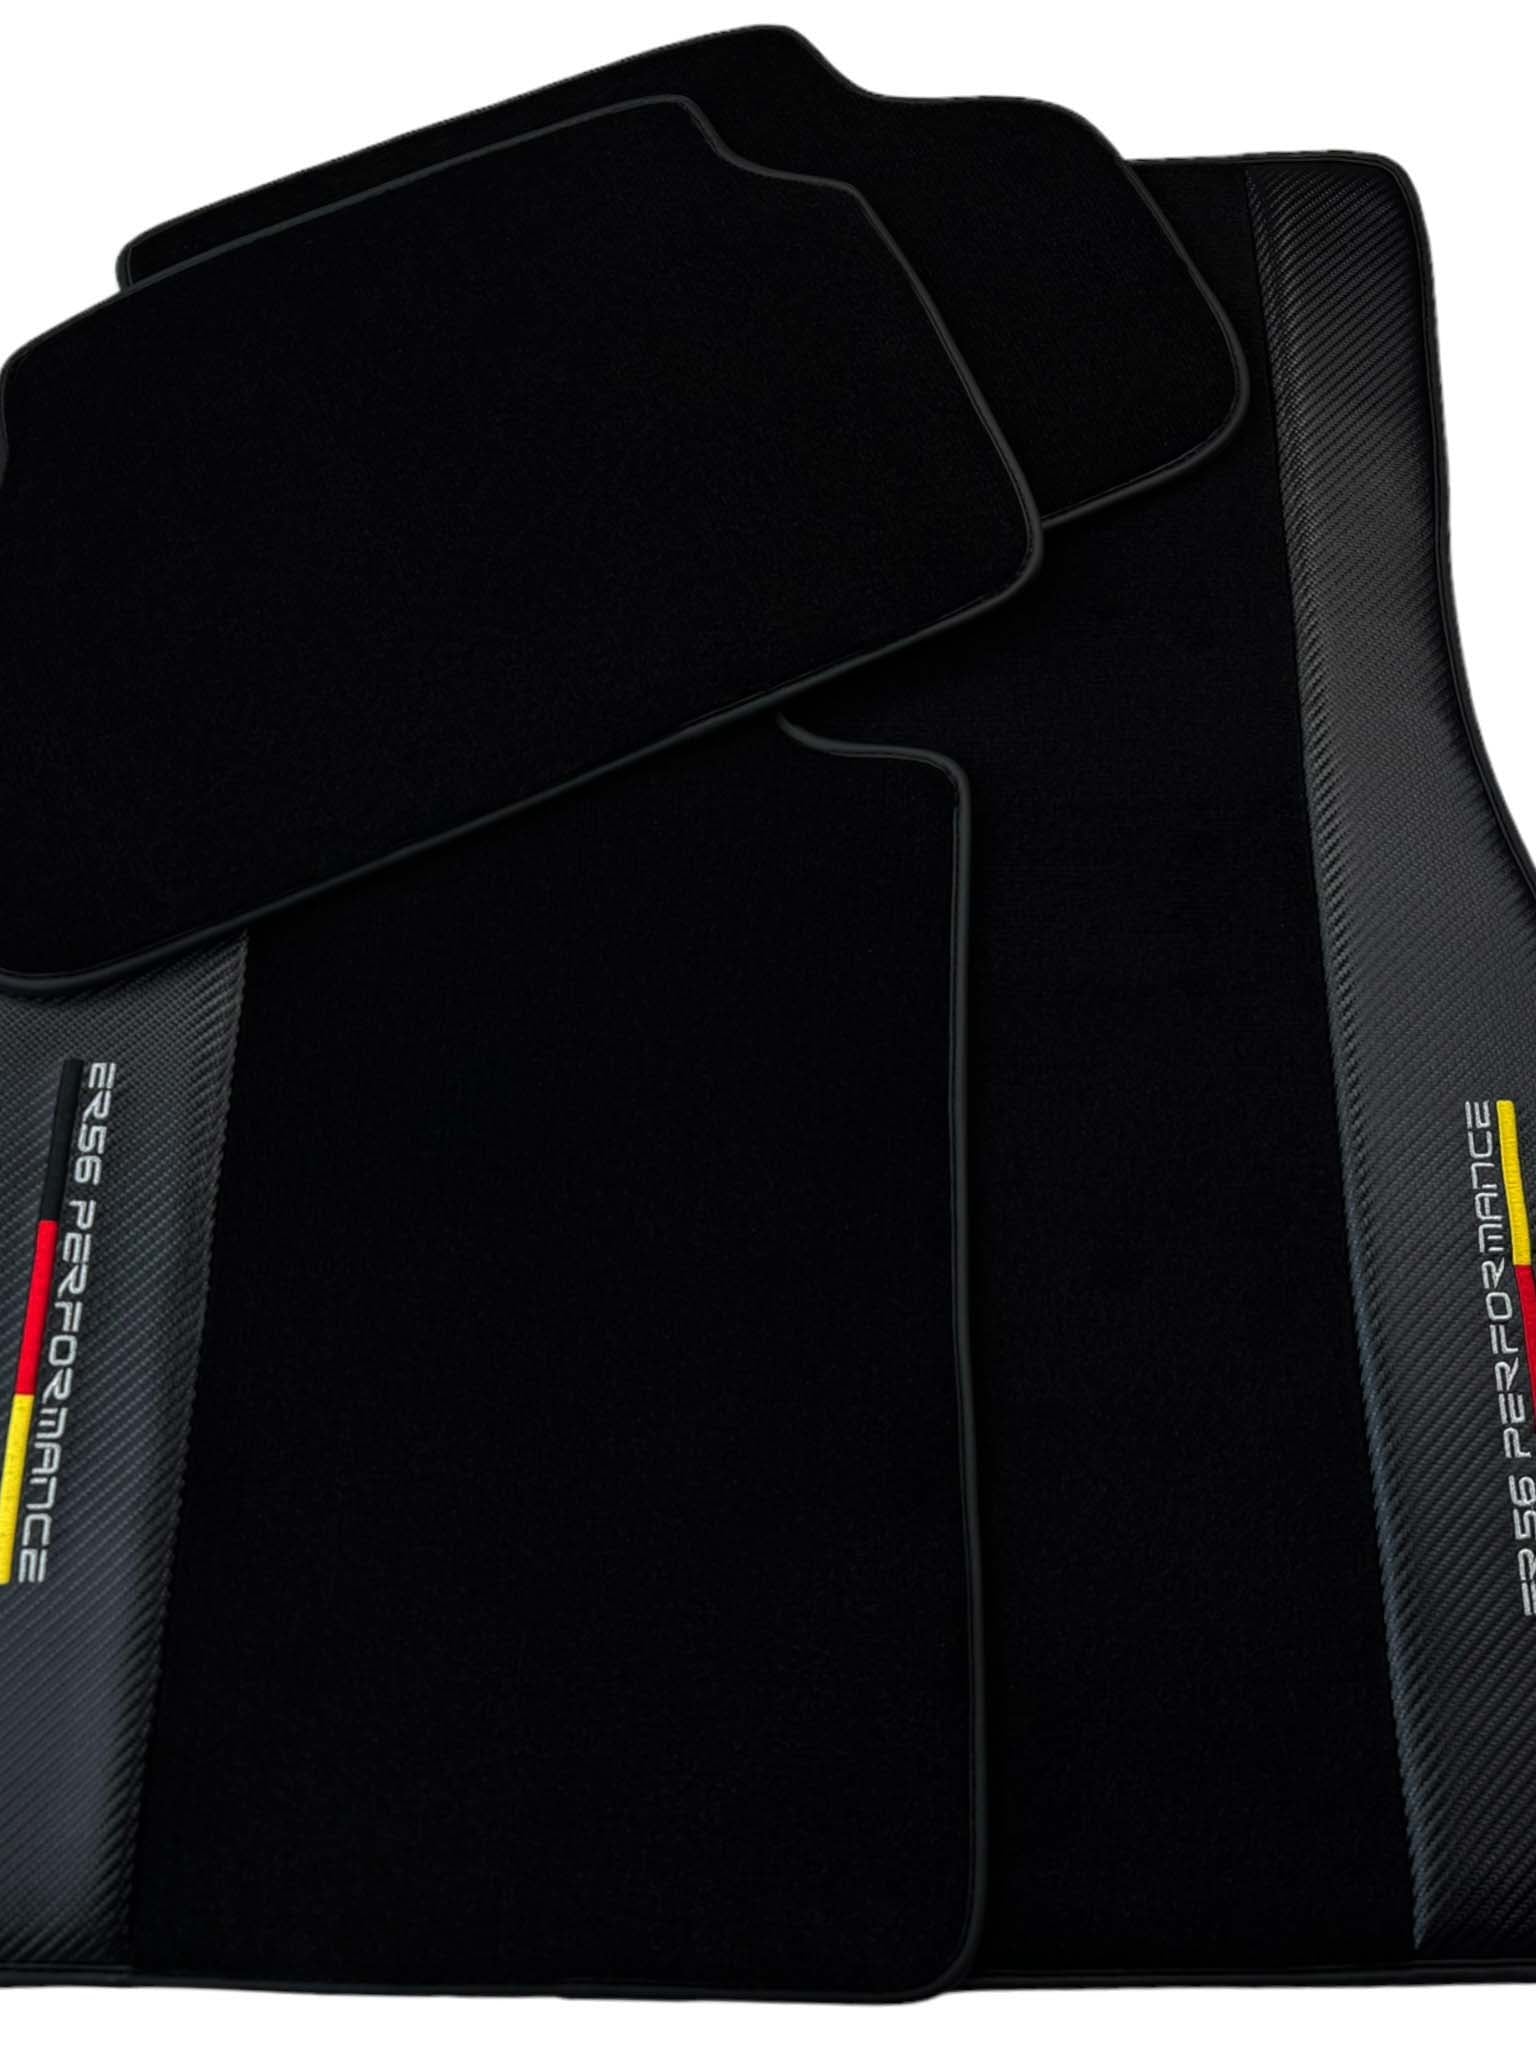 Black Floor Floor Mats For BMW 3 Series E93 | Fighter Jet Edition Brand | ER56 Performance | Carbon Edition